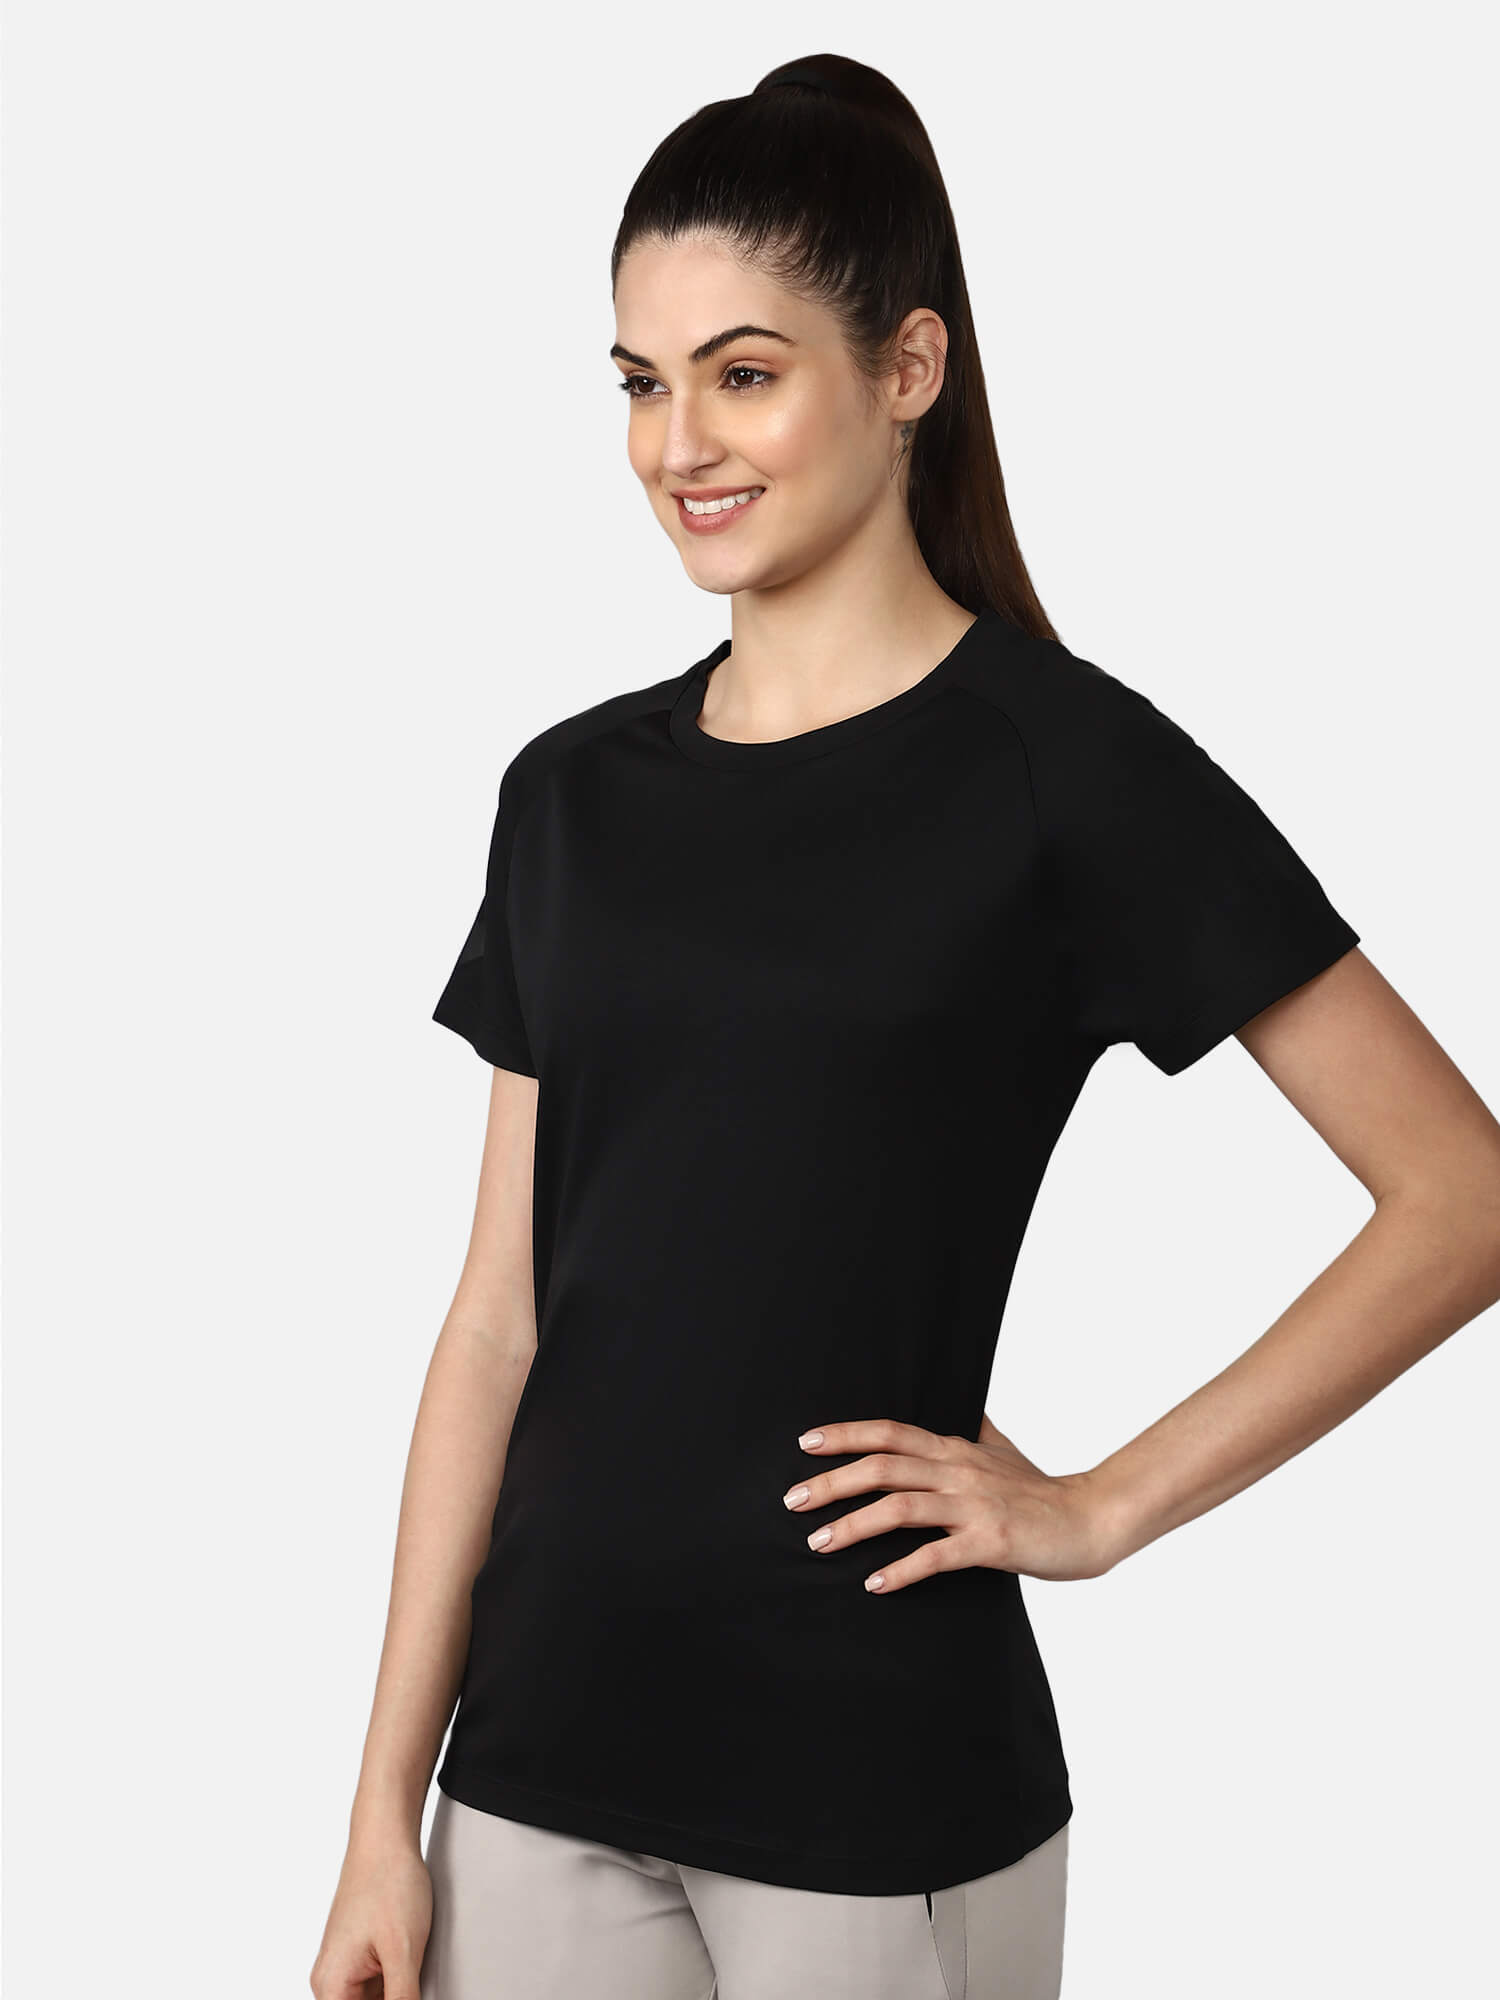 NECHOLOGY Womens T-Shirts Plain Black T Shirts Women India